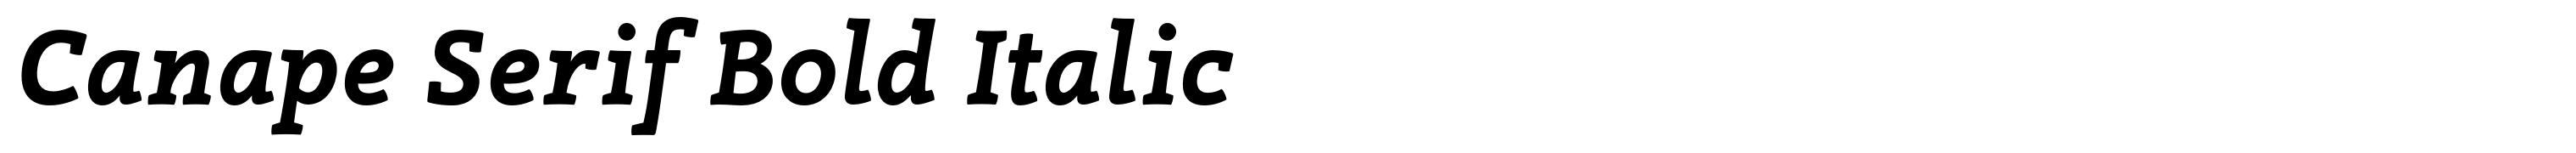 Canape Serif Bold Italic